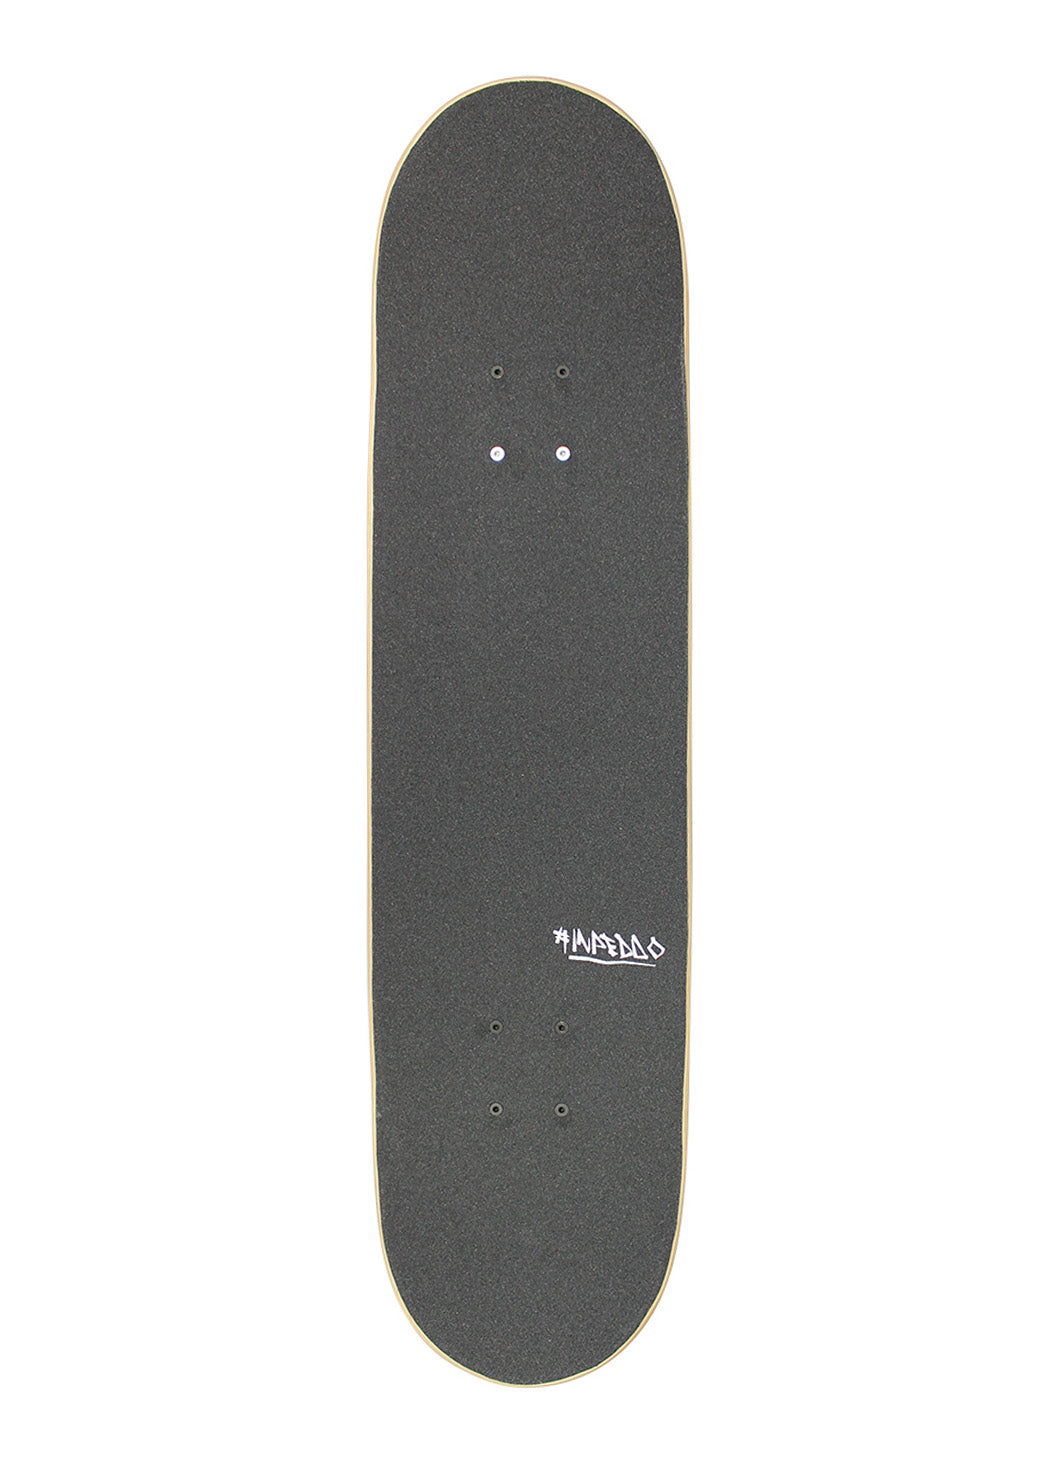 Wigwam - Skateboard Std Complete